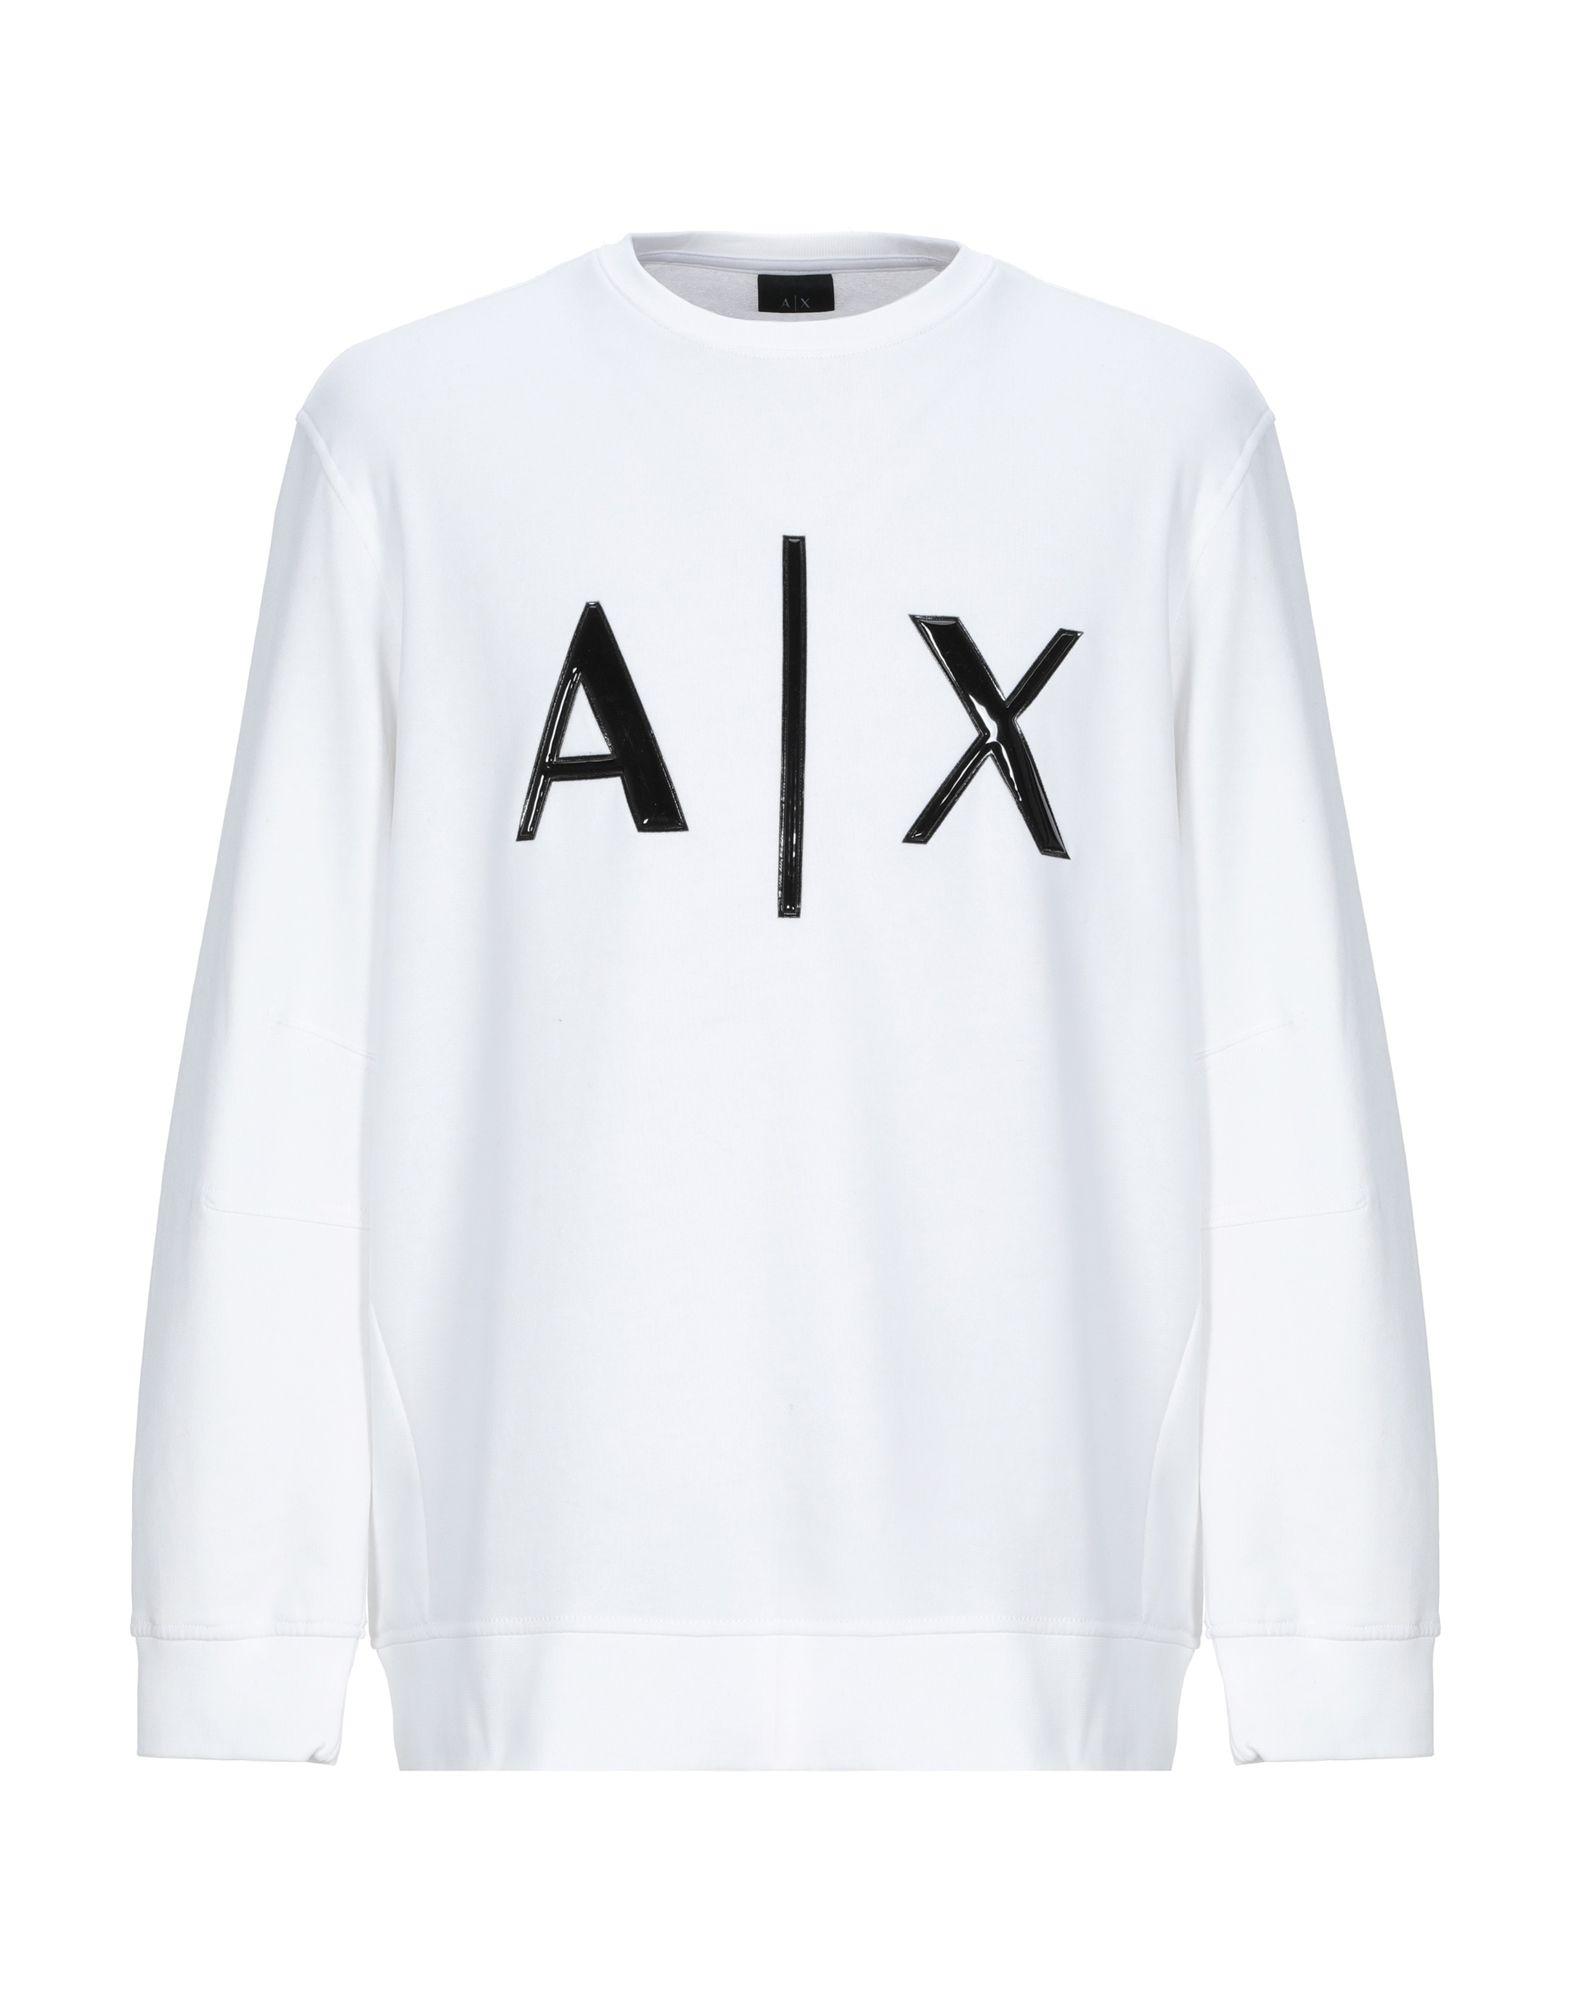 Armani Exchange Sweatshirt in White for Men - Lyst